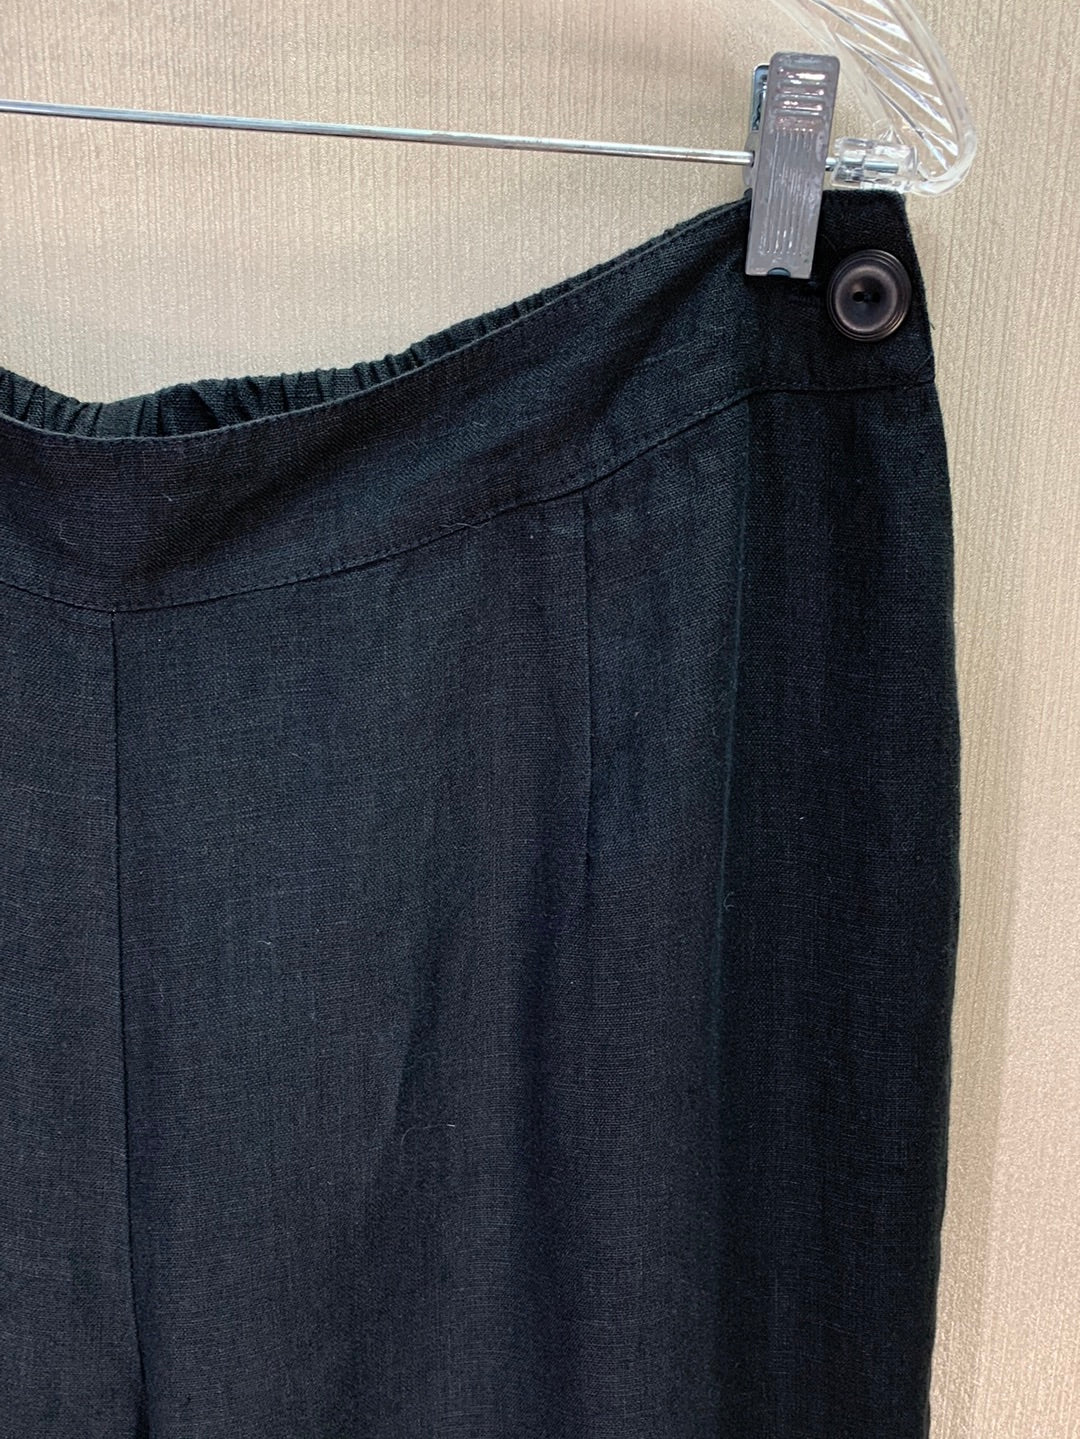 FLAX black Linen Flat Front Elastic Back Side Button Pants - L